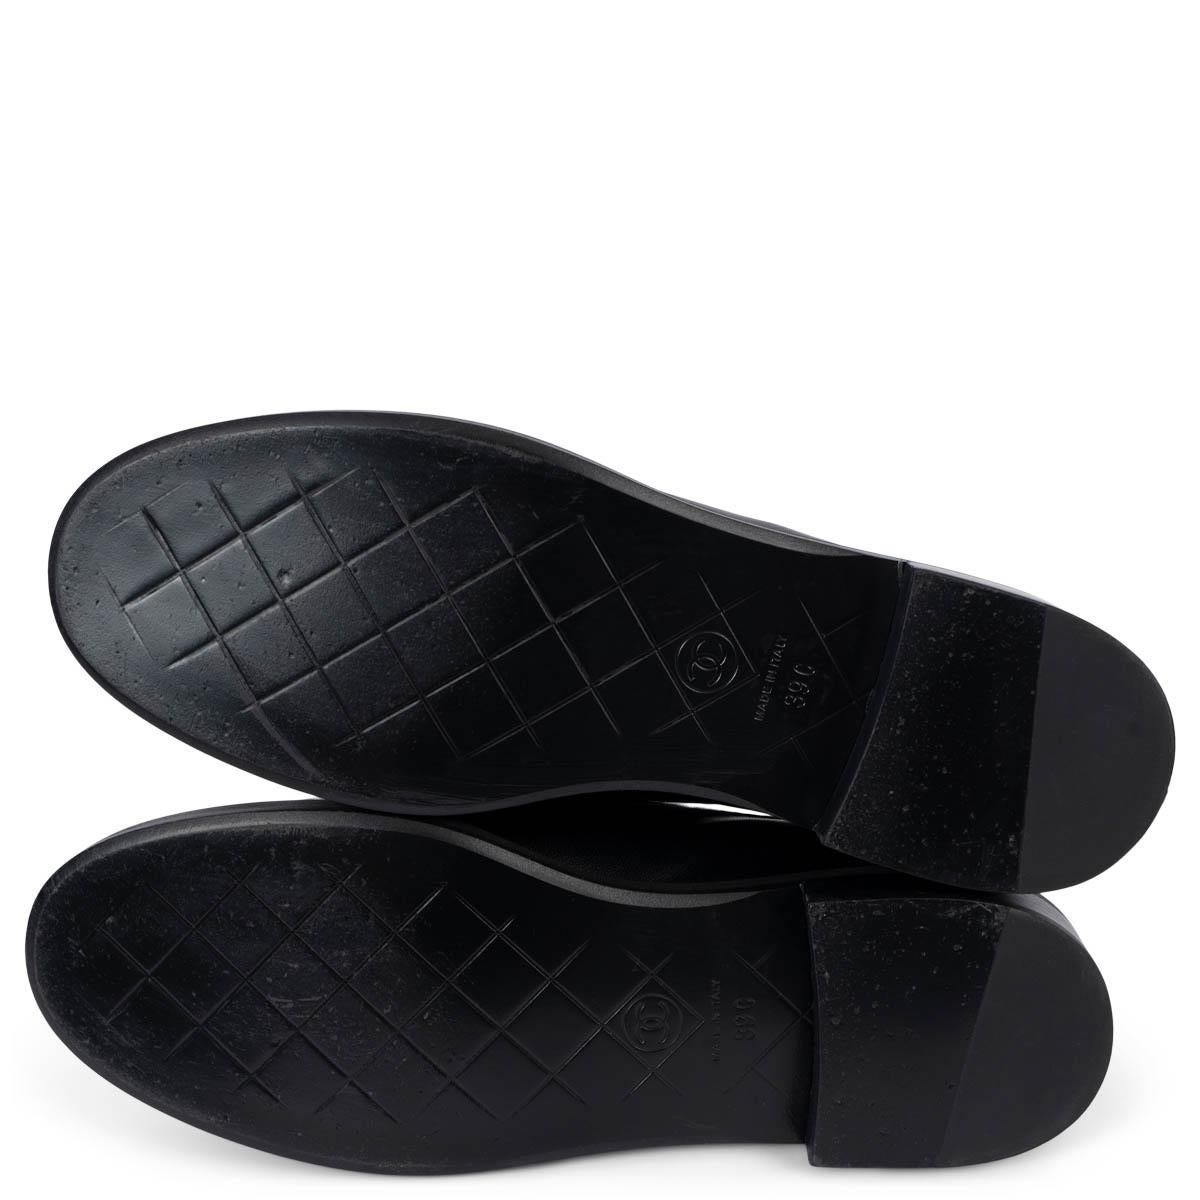 CHANEL cuir noir REV TURNLOCK Mocassins Chaussures 39 en vente 4